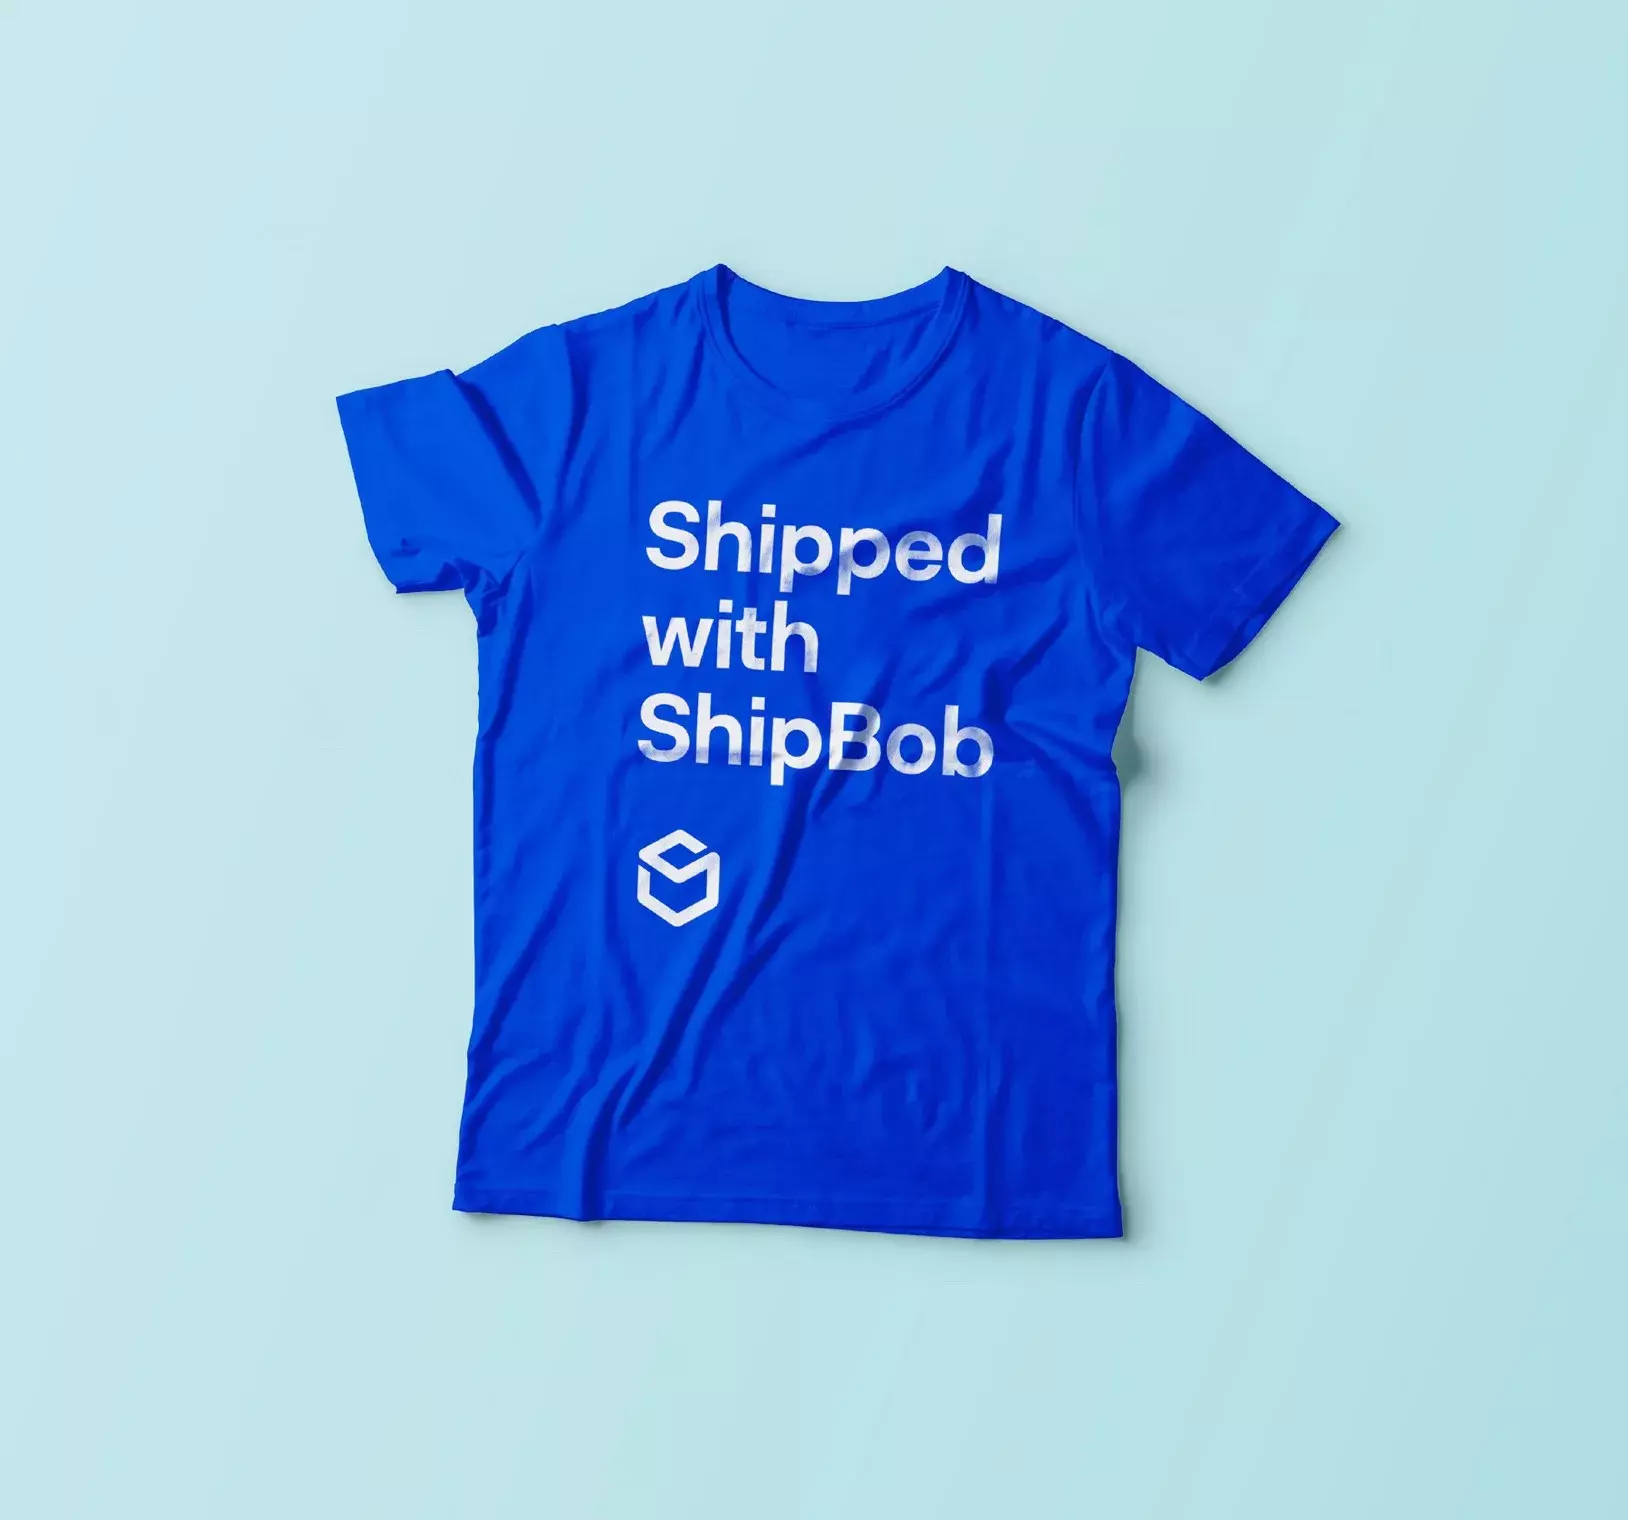 Shipbob t-shirt simulation by BB Agency